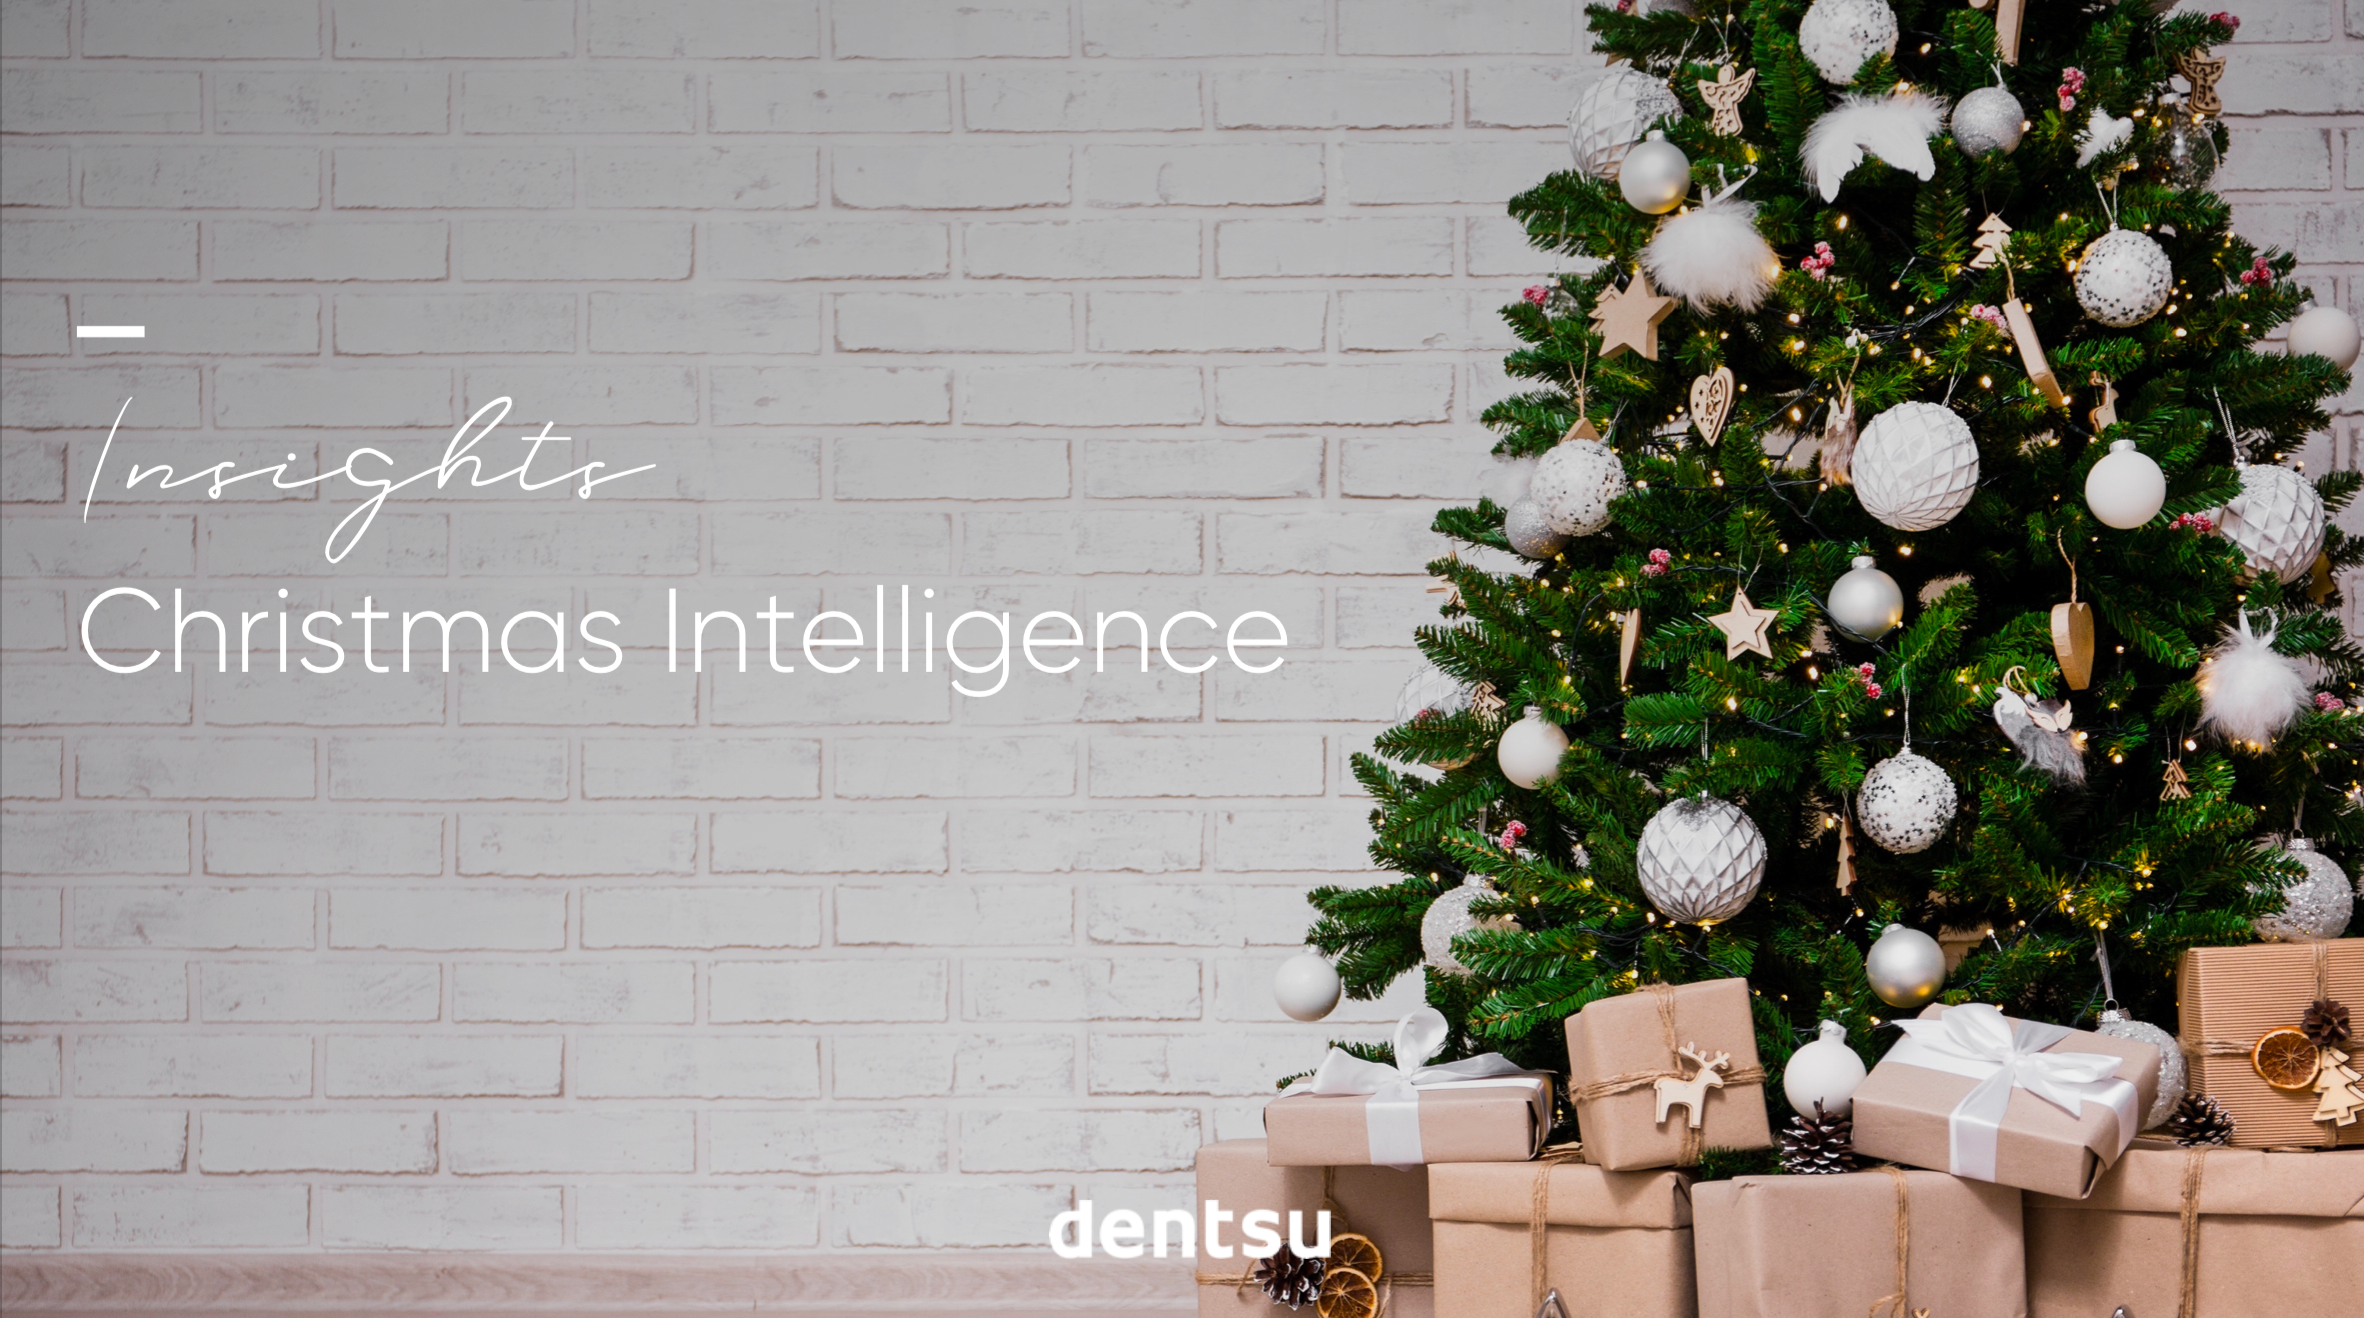 dentsu | Christmas in the wake of COVID-19